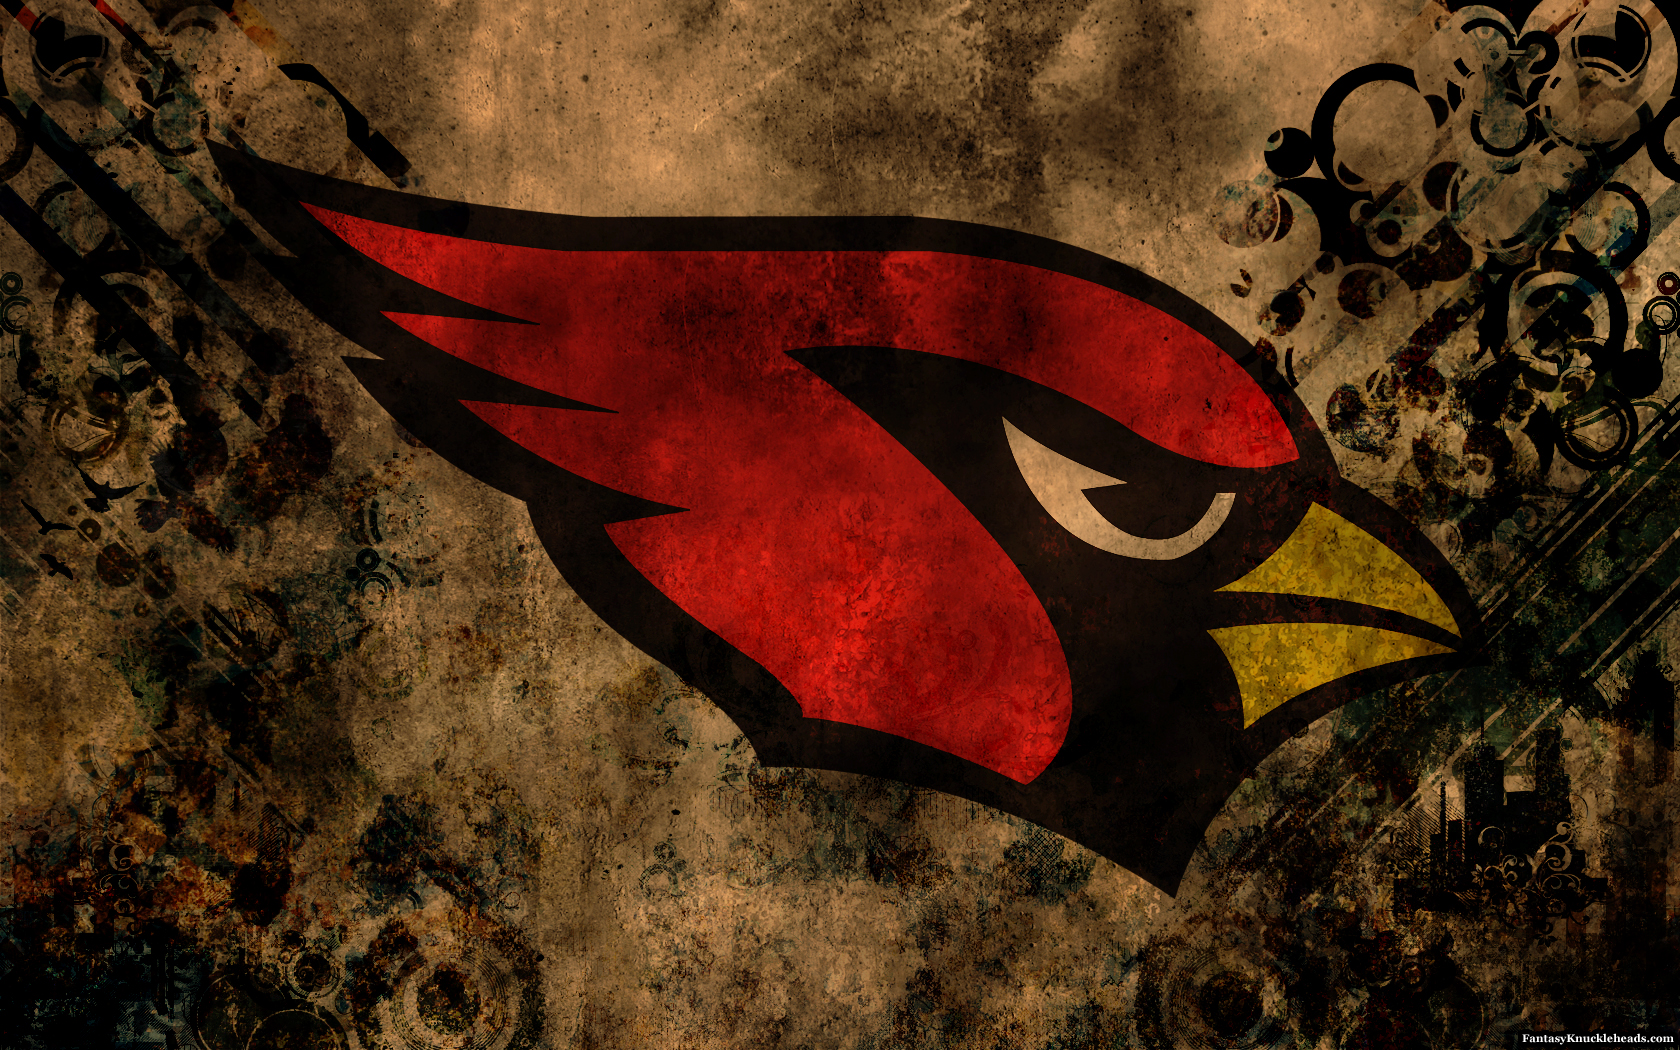 Arizona Cardinals Wallpaper HD | Full HD Pictures